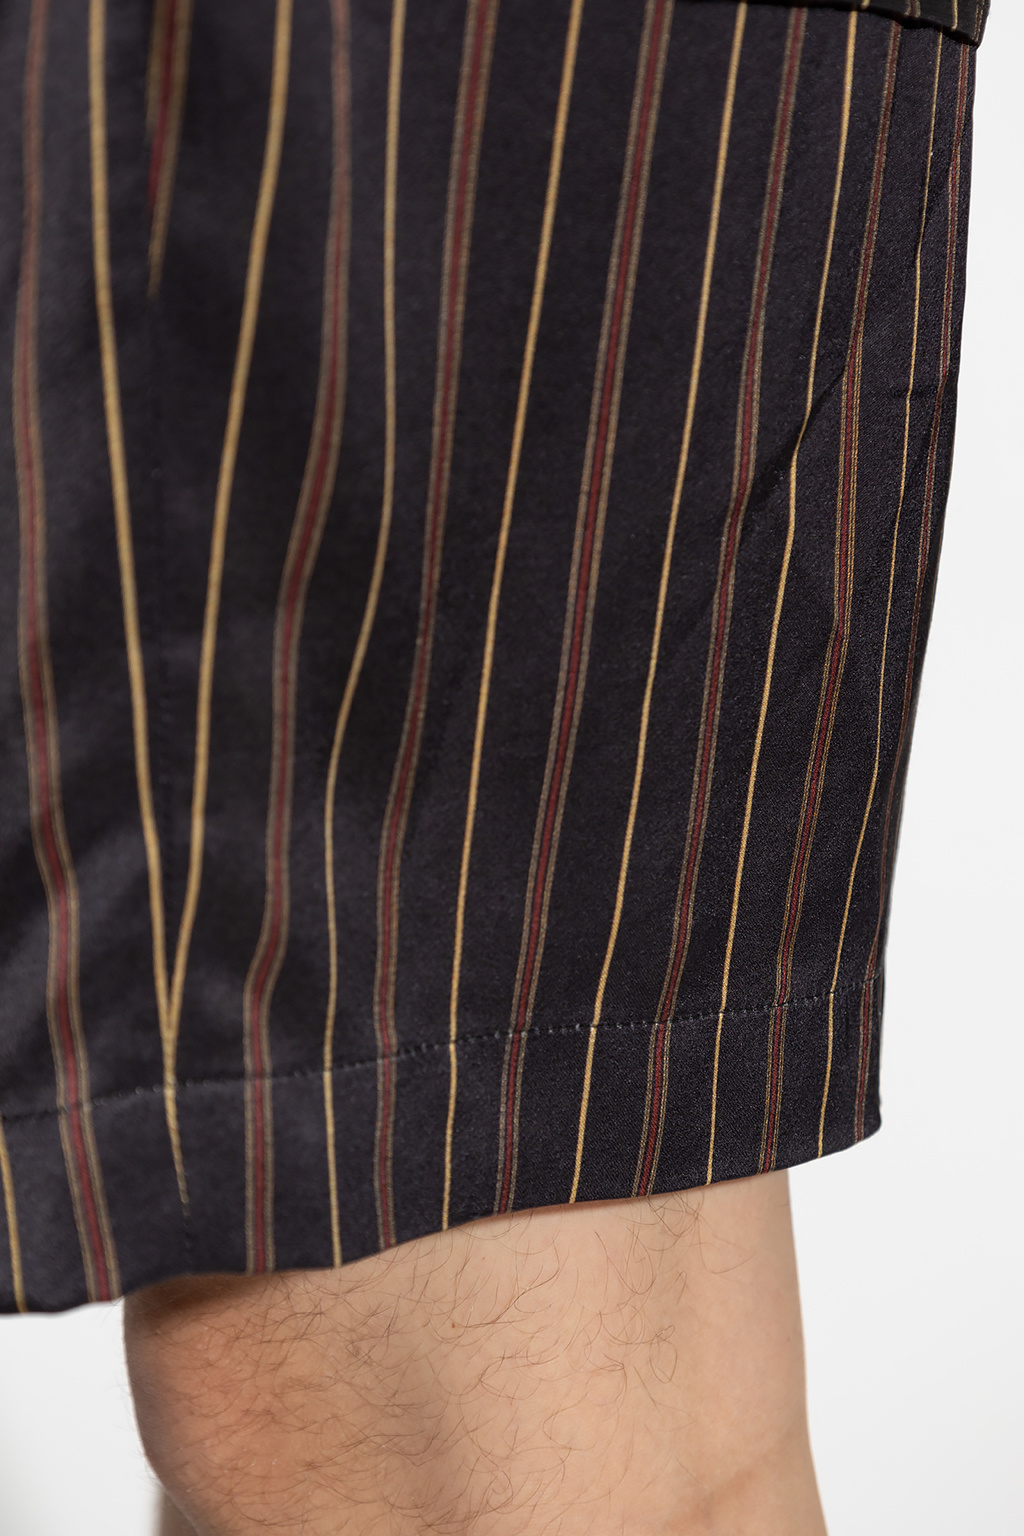 Dries Van Noten Striped shorts